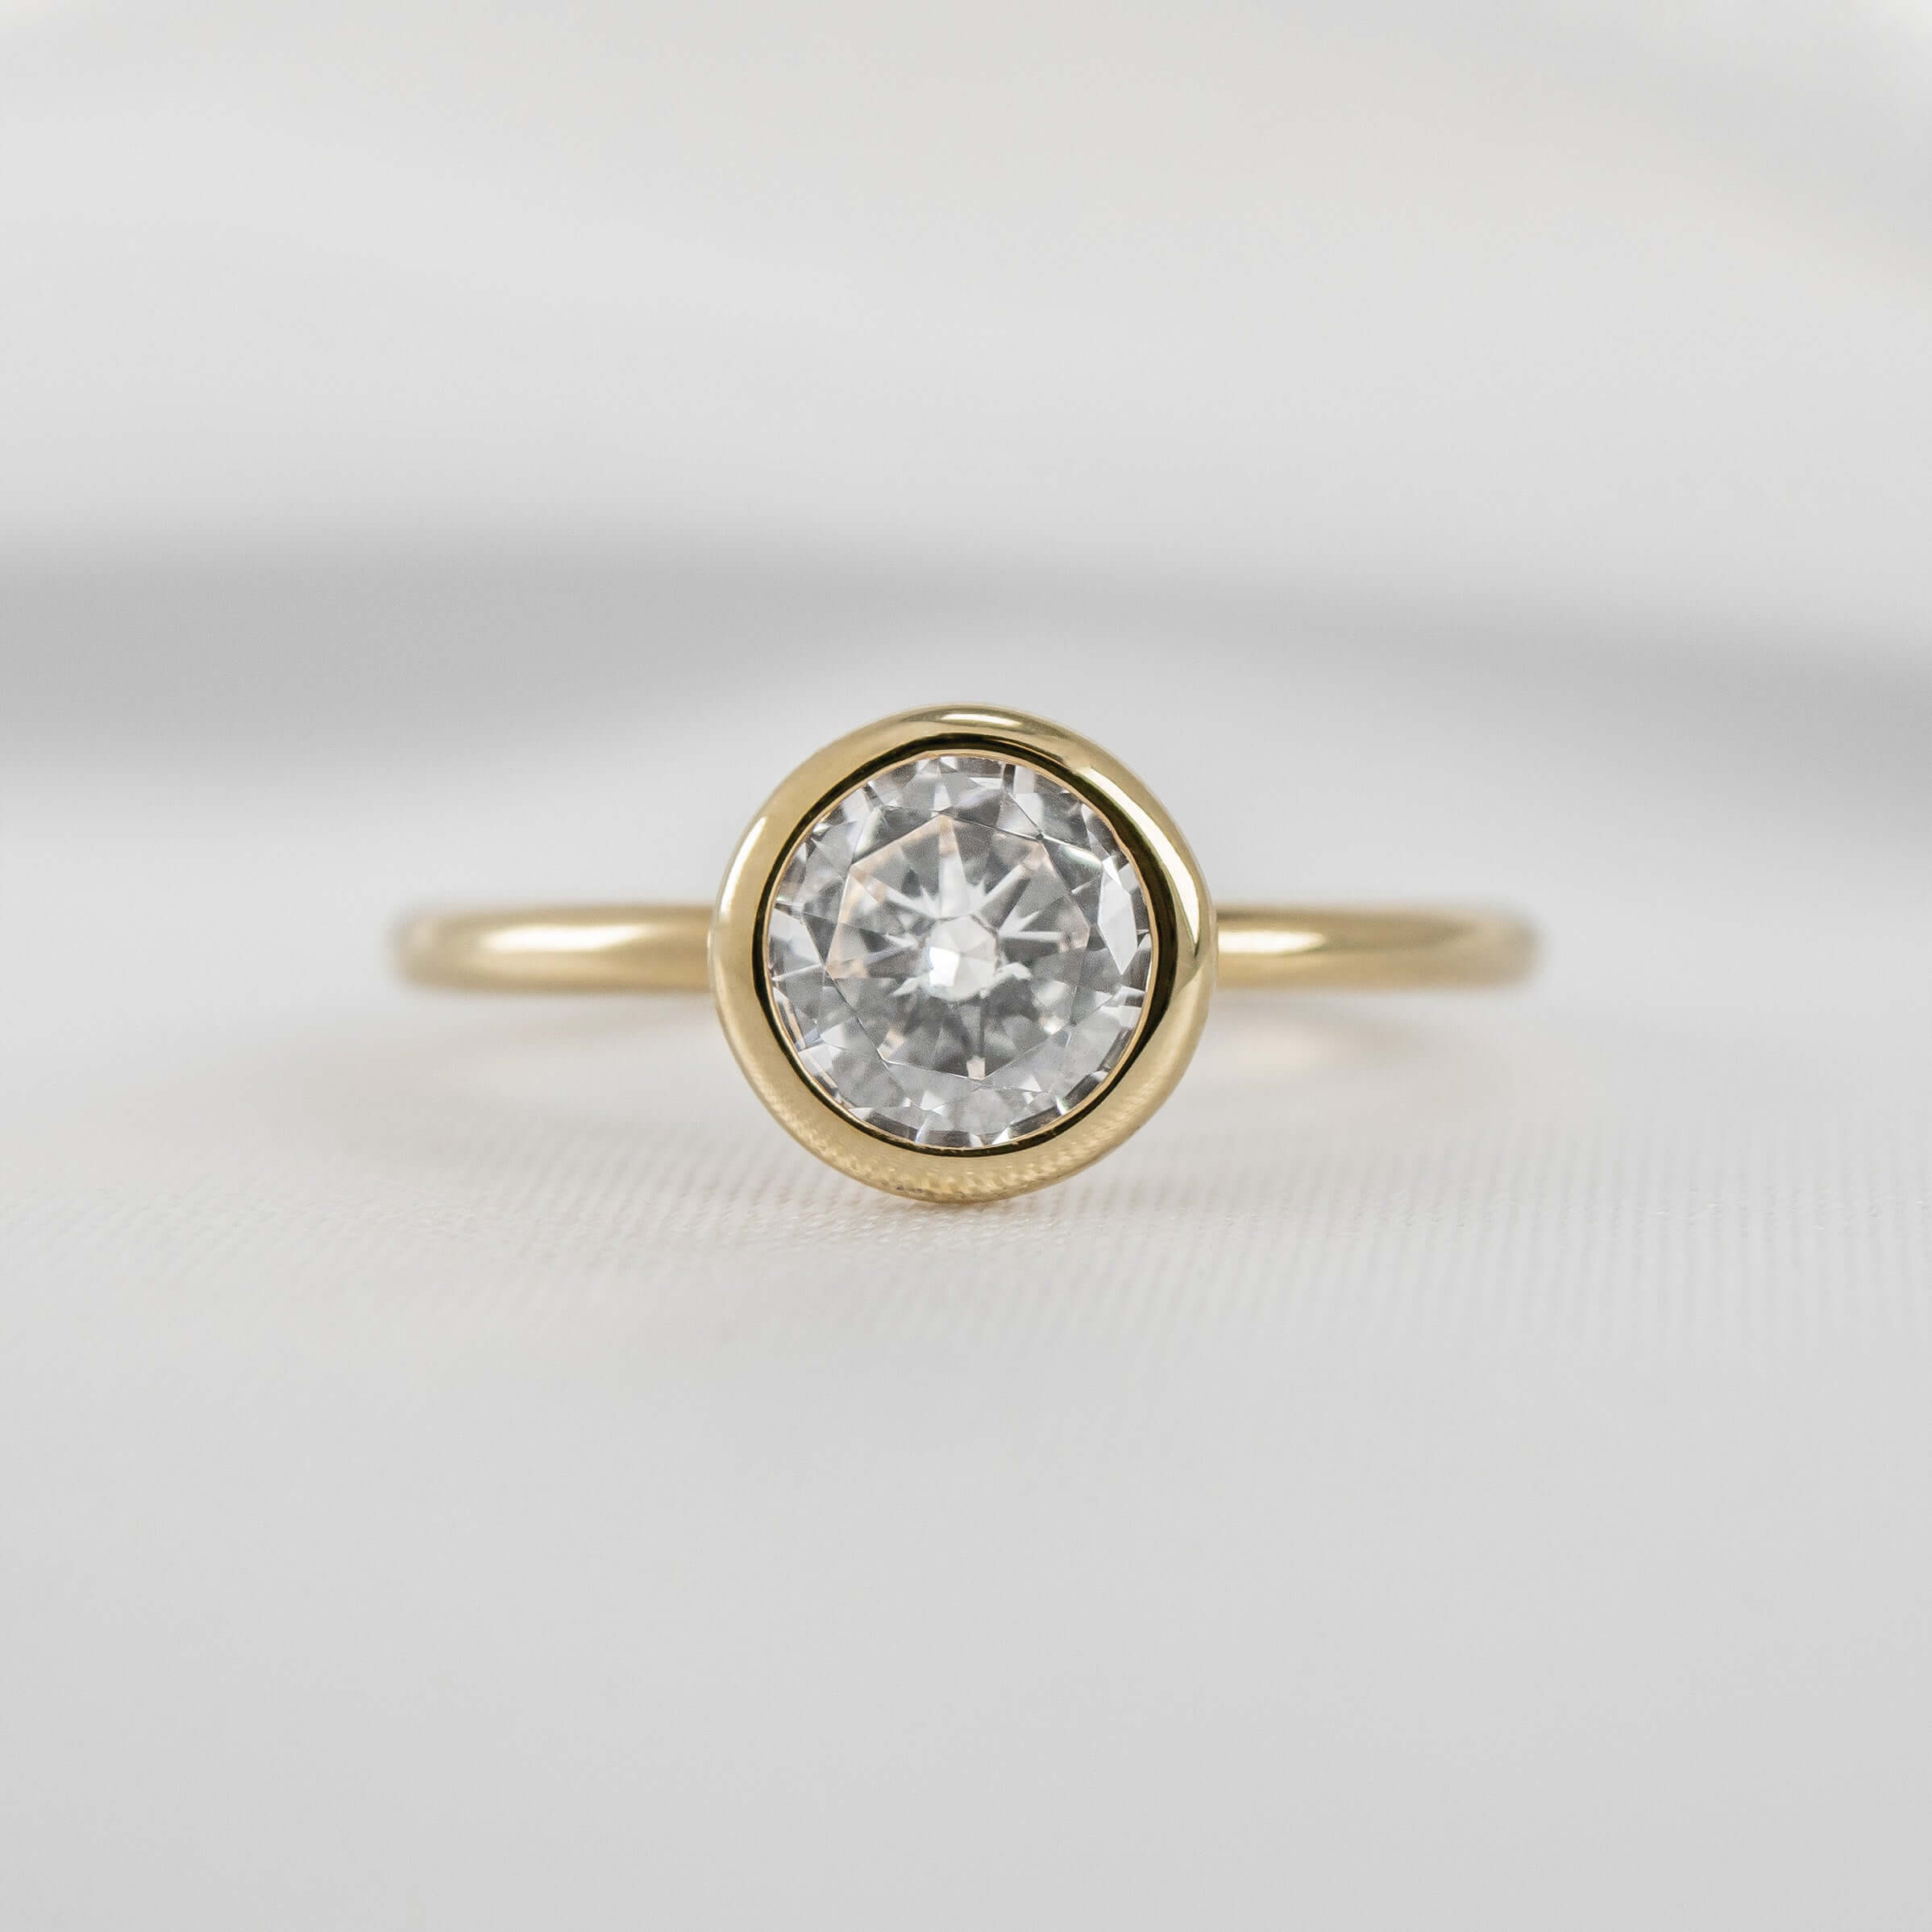 Shown in 1.0 carat " The Nova Bezel Diamond Engagement Ring | Lisa Robin#18k-yellow-gold